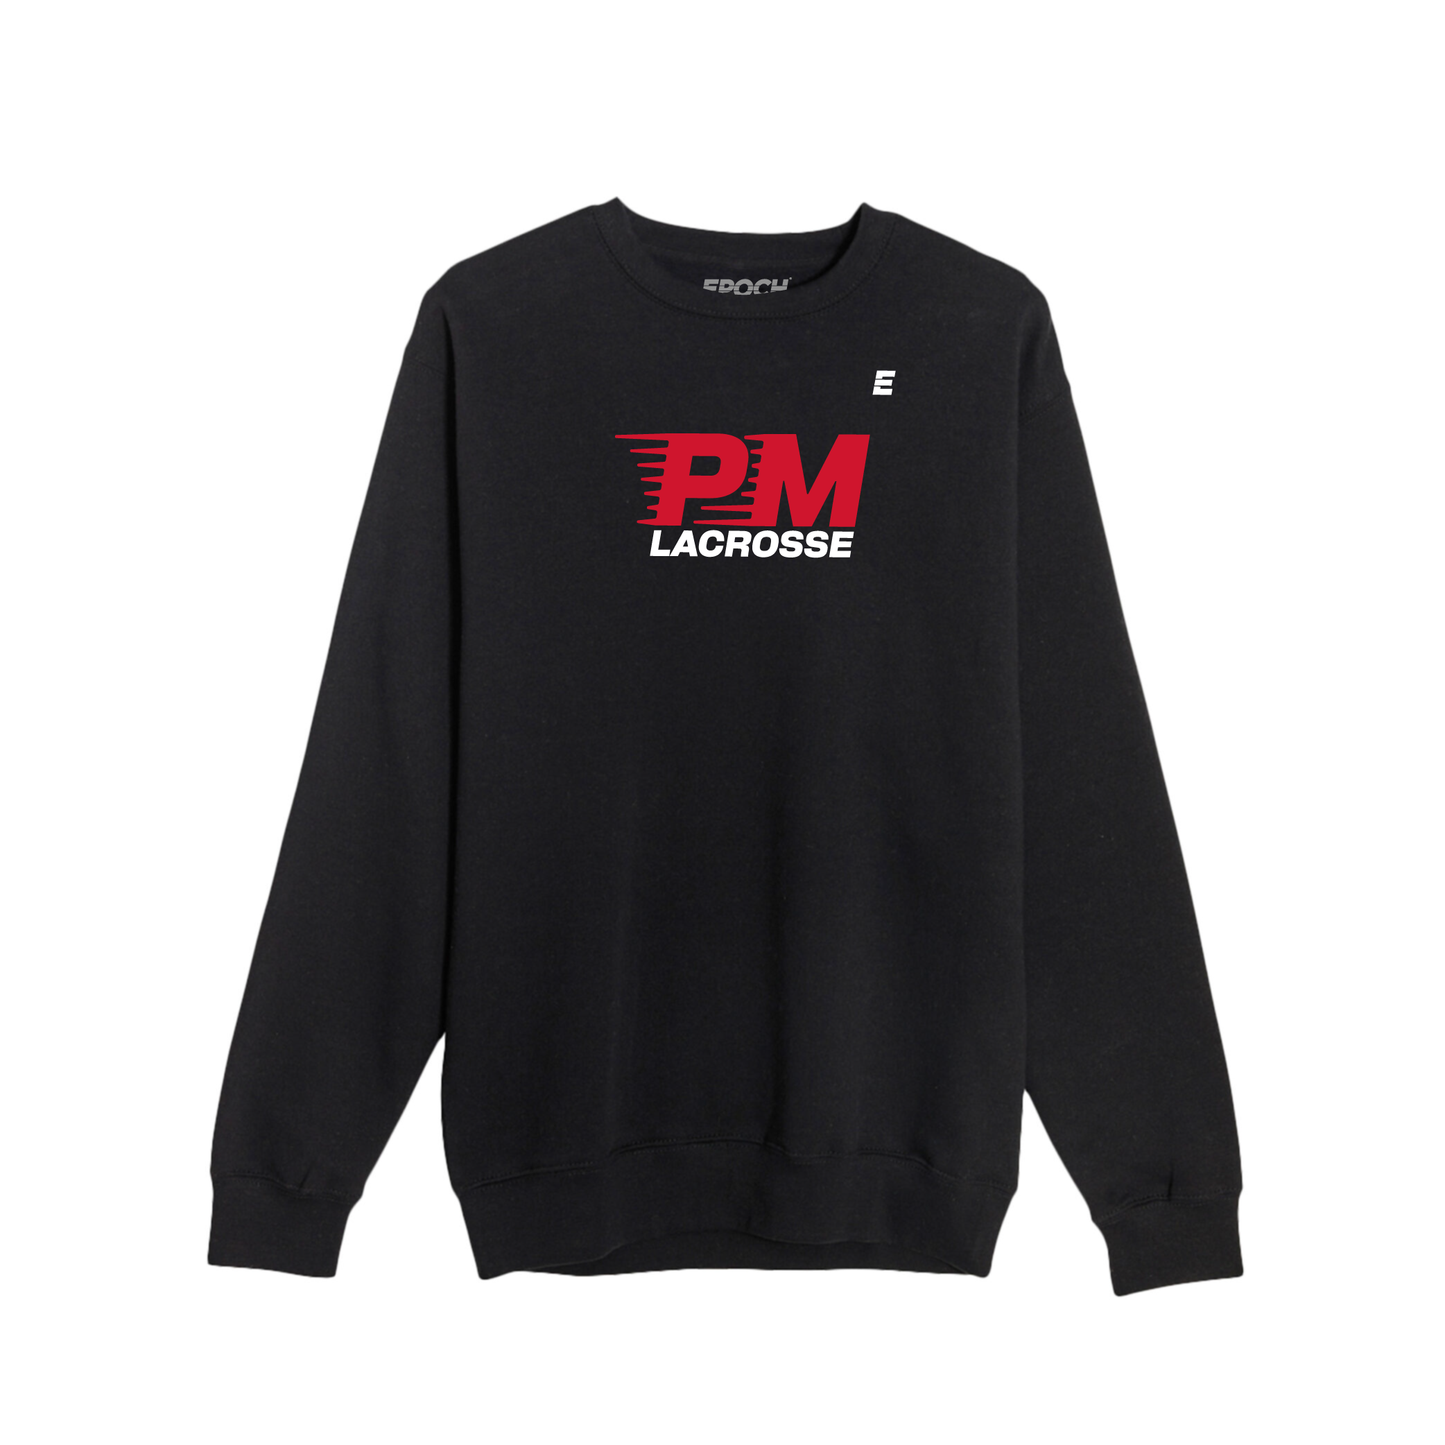 PM Lacrosse - Unisex Crewneck Sweatshirt